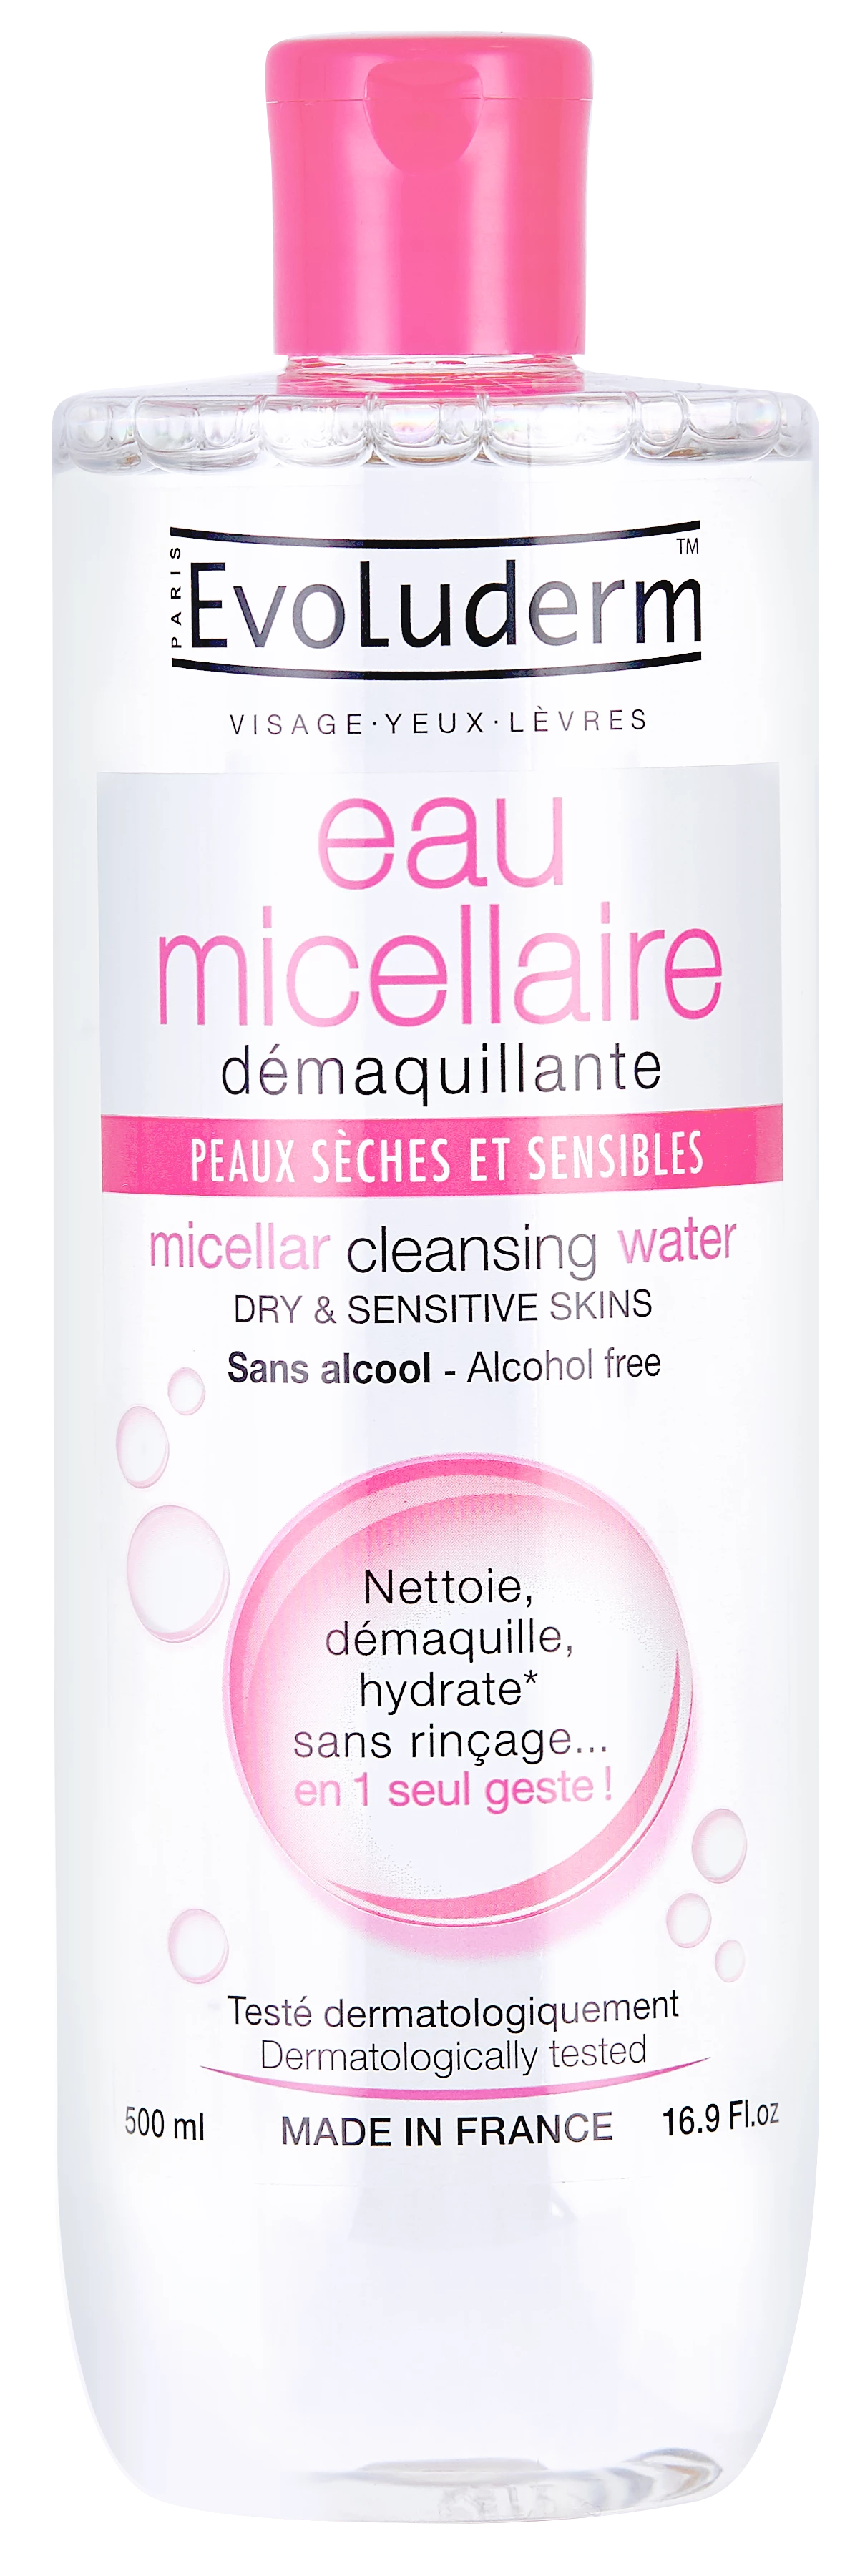 Micellar Water Dry/Sensitive Skin, 500ml - EVOLUDERM